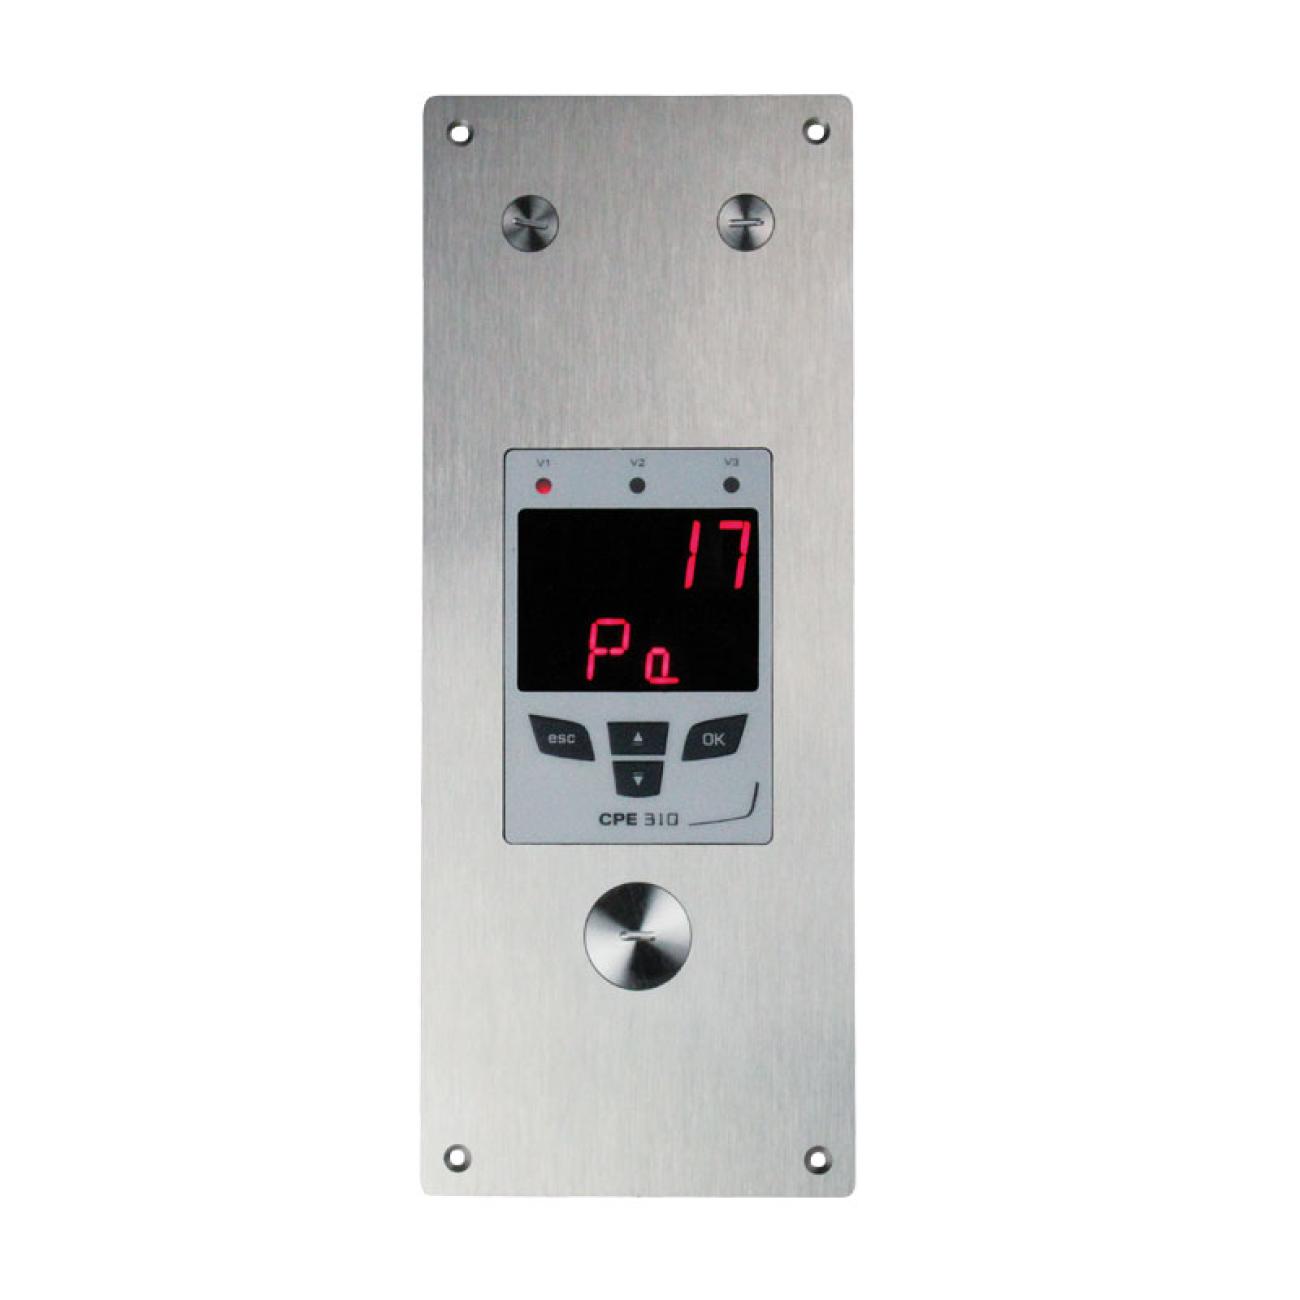 Flushmount multifunction pressure sensor - CPE 310-S / CPE 311-S 